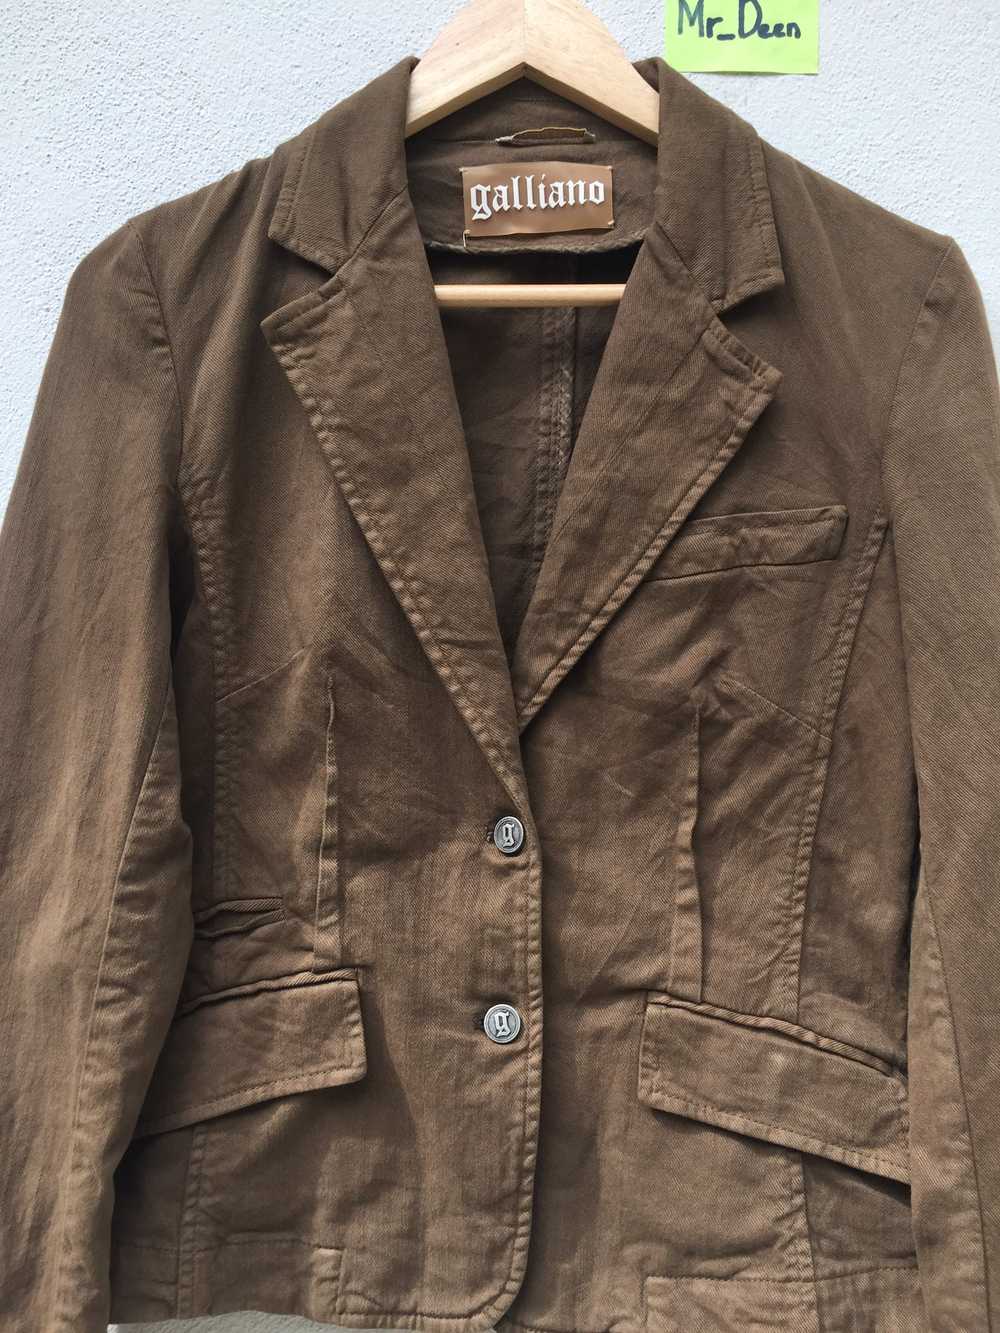 John Galliano John Galliano Denim Jacket - image 4